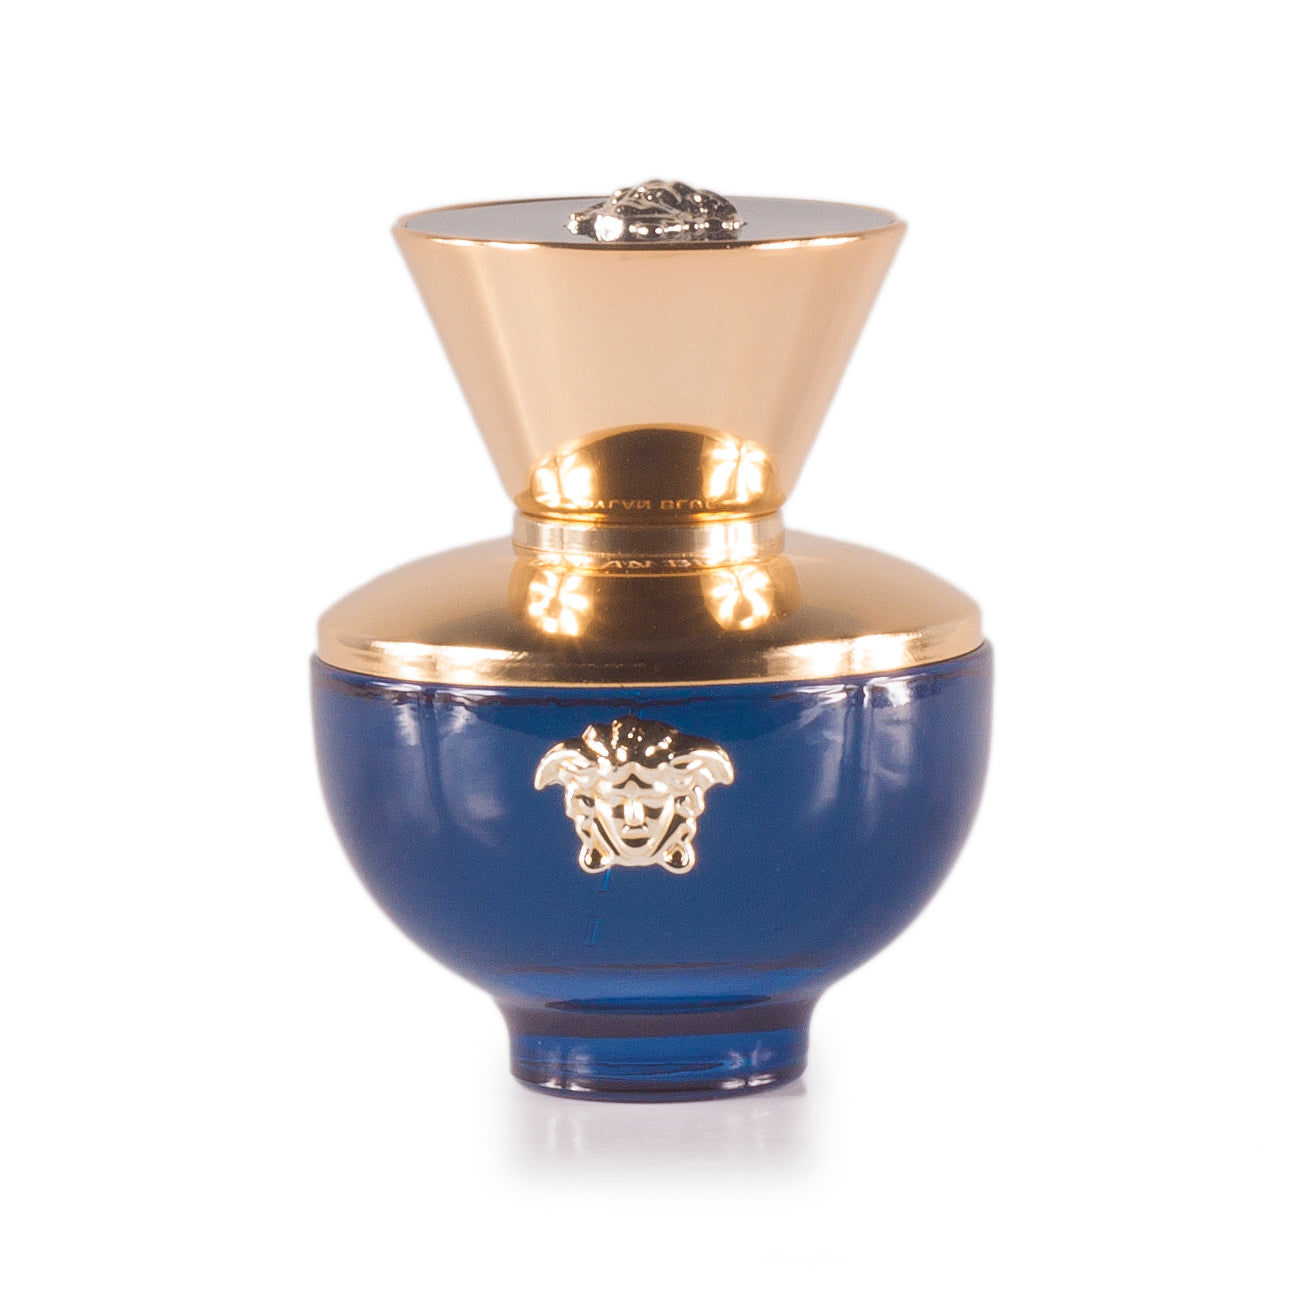 Dylan Blue Eau de Parfum Spray for Women by Versace 1.7 oz. Click to open in modal